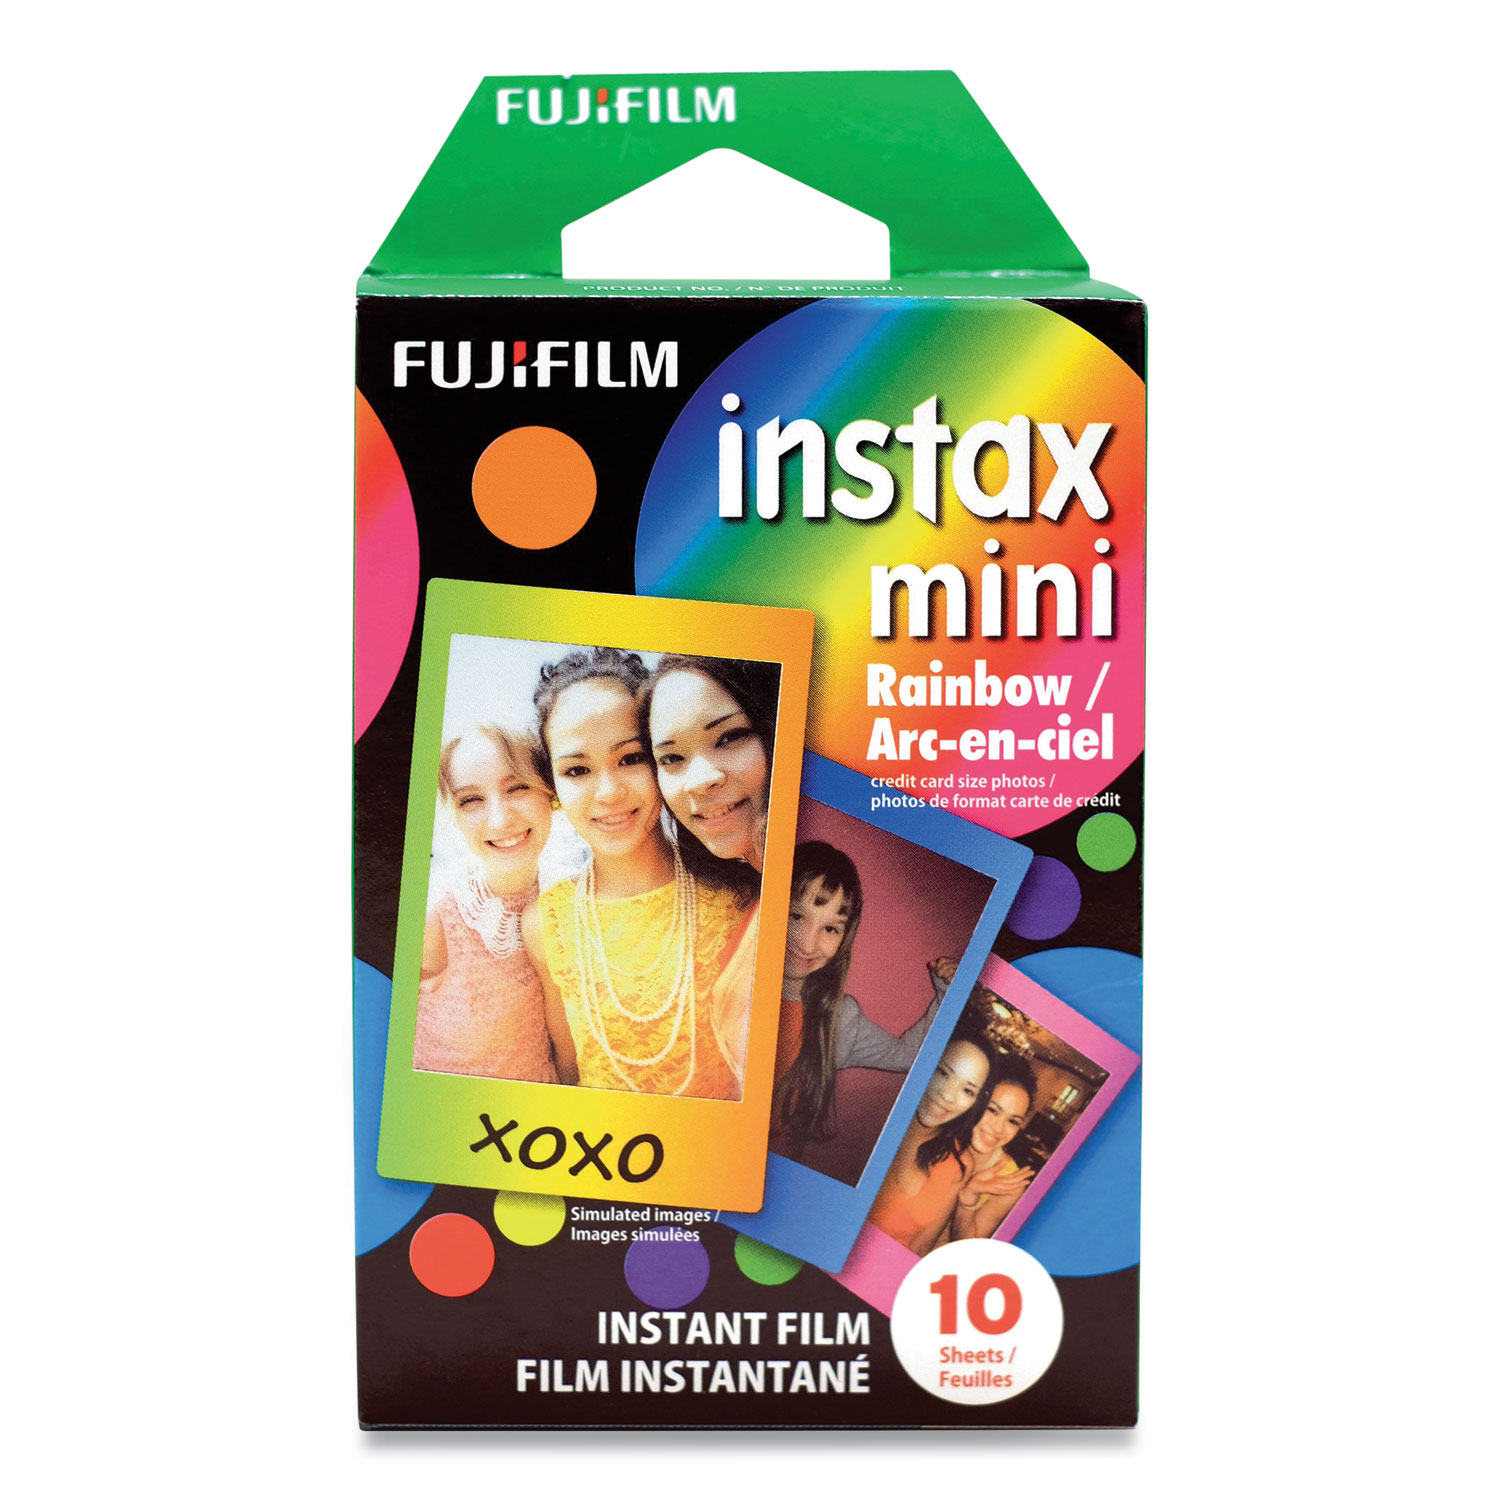 Fujifilm Instax Mini Rainbow Instant Film, 800 ASA, Color, 10 Sheets